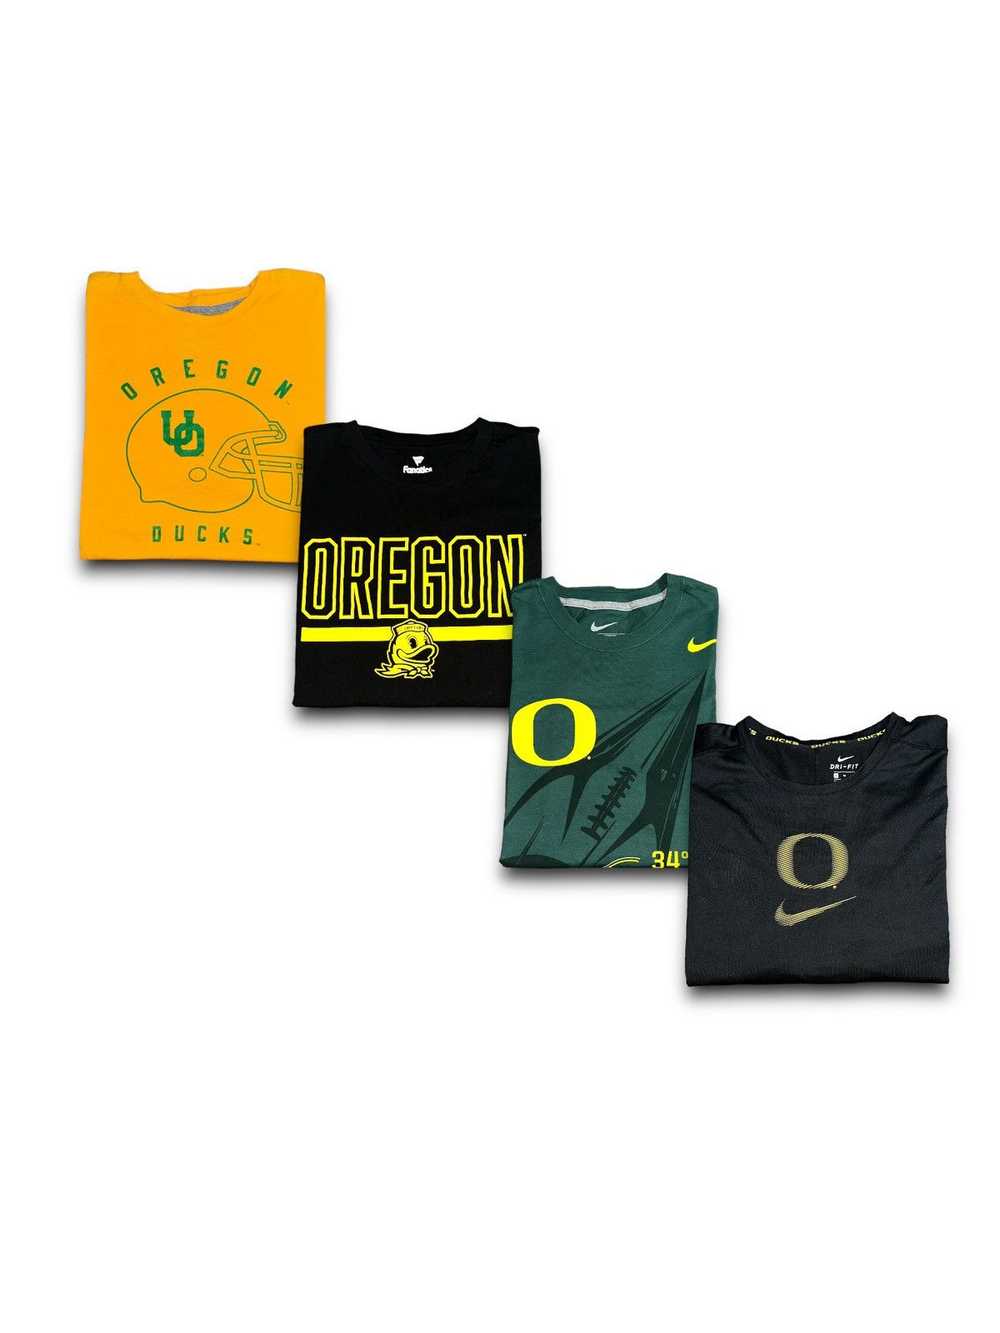 Ncaa × Nike Oregon ducks Nike shirt bundle - image 1